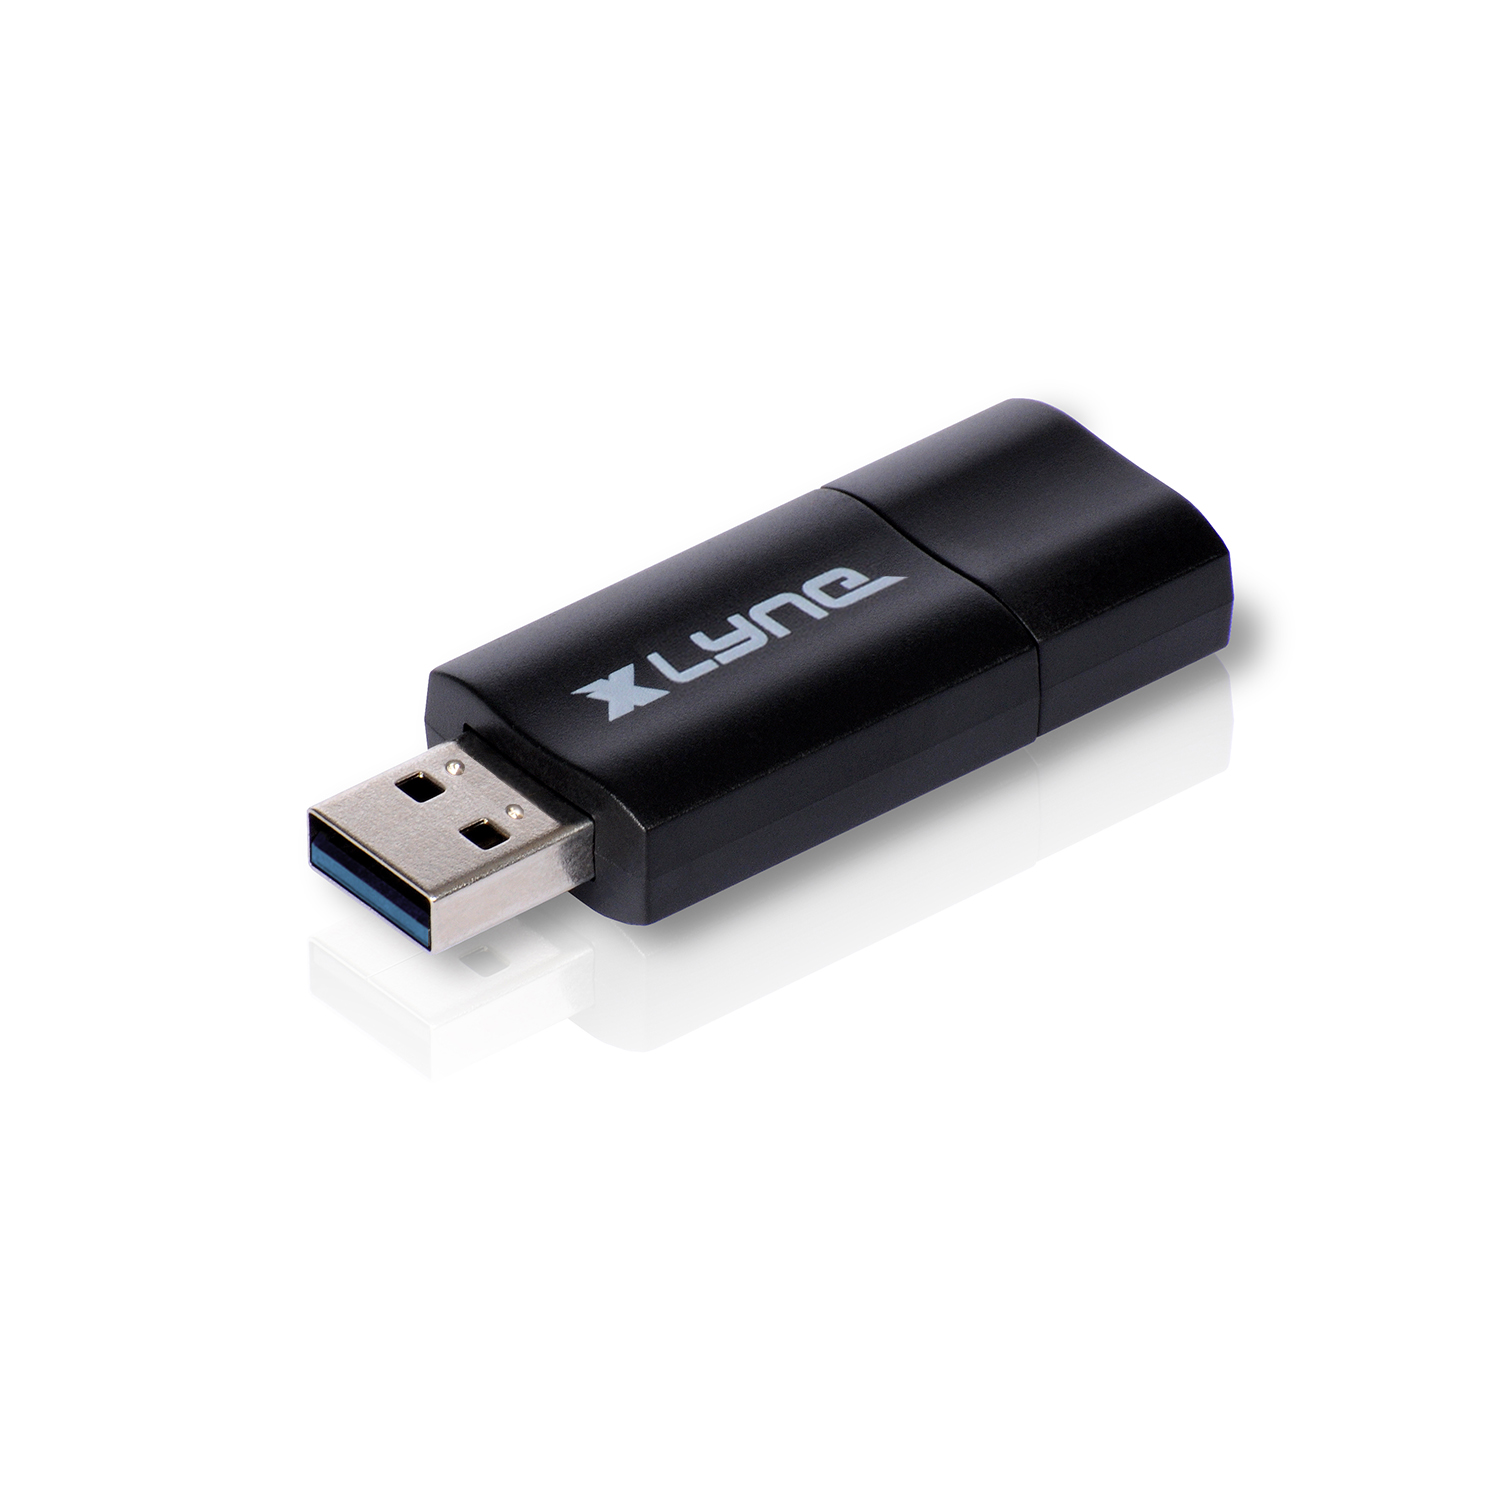 USB - GB XLYNE USB 512 3.0 Stick